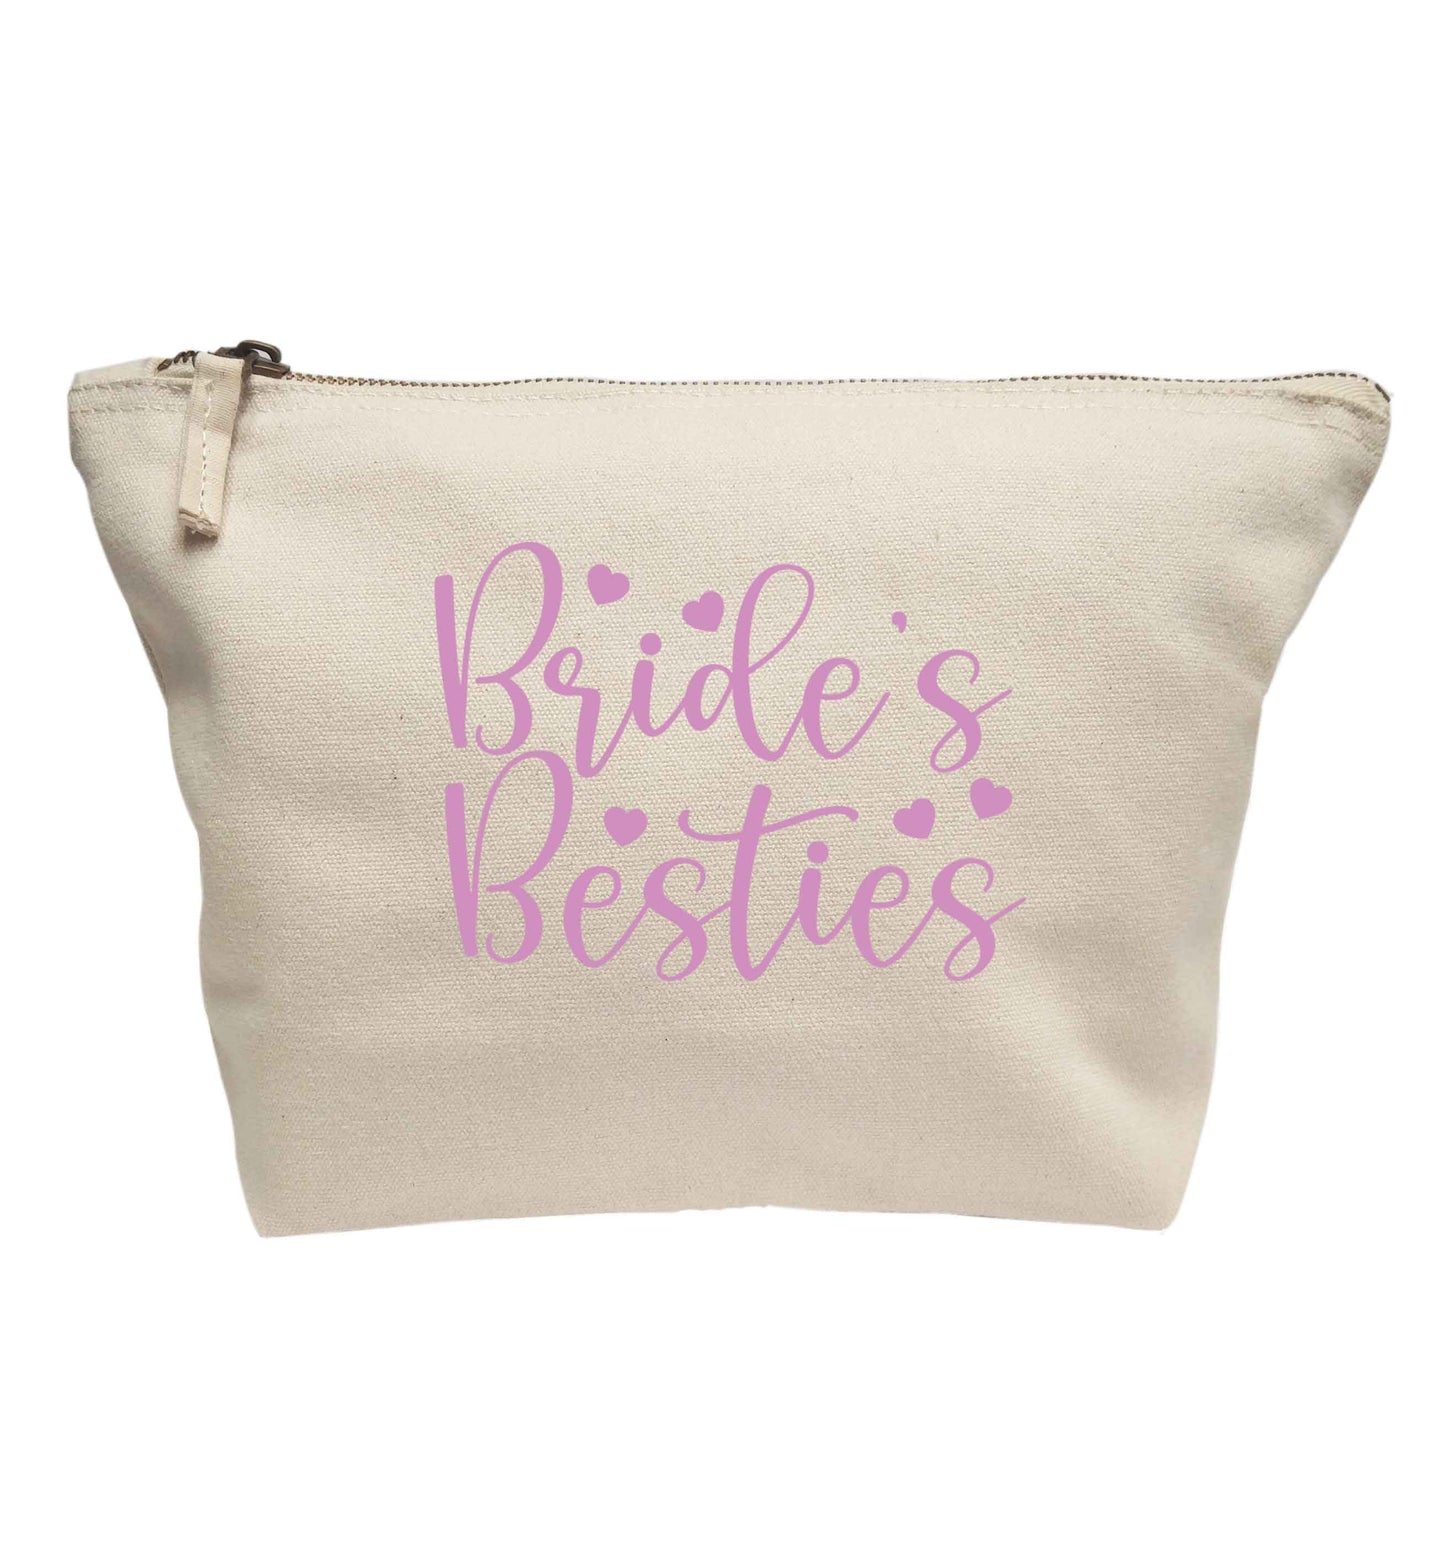 Brides besties | Makeup / wash bag